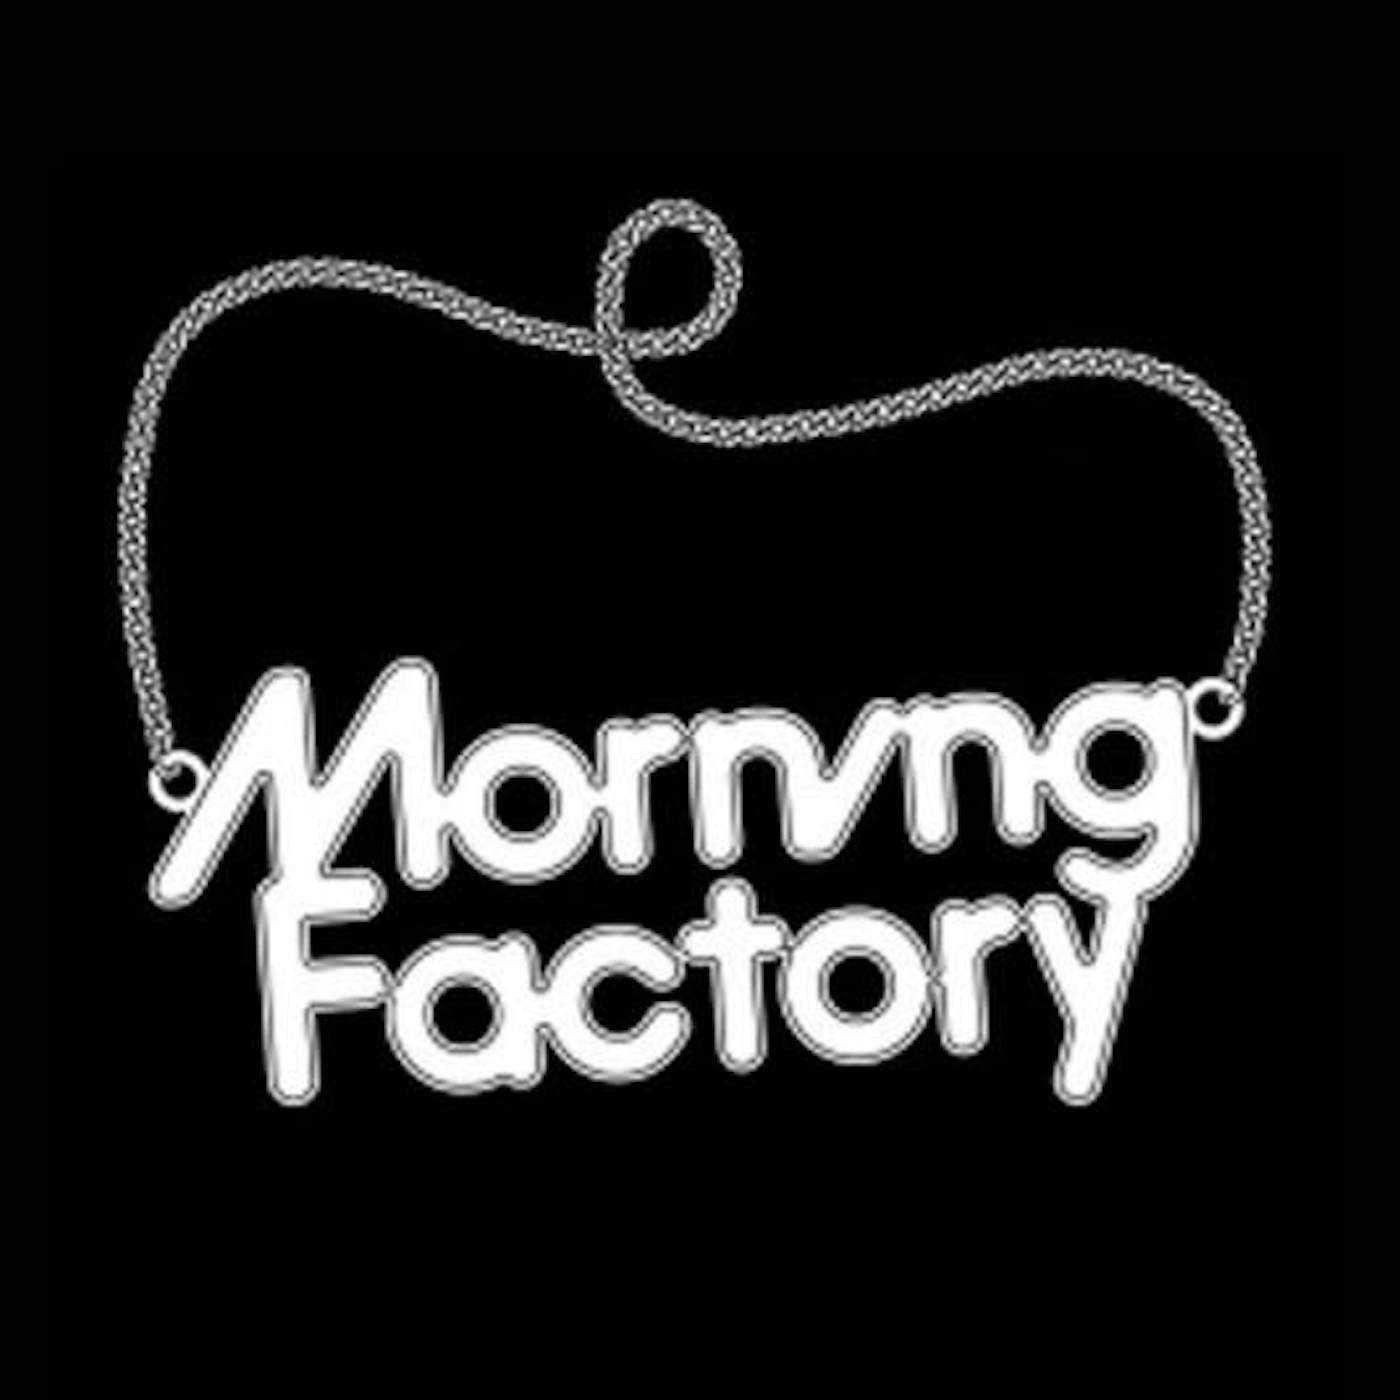 Morning Factory